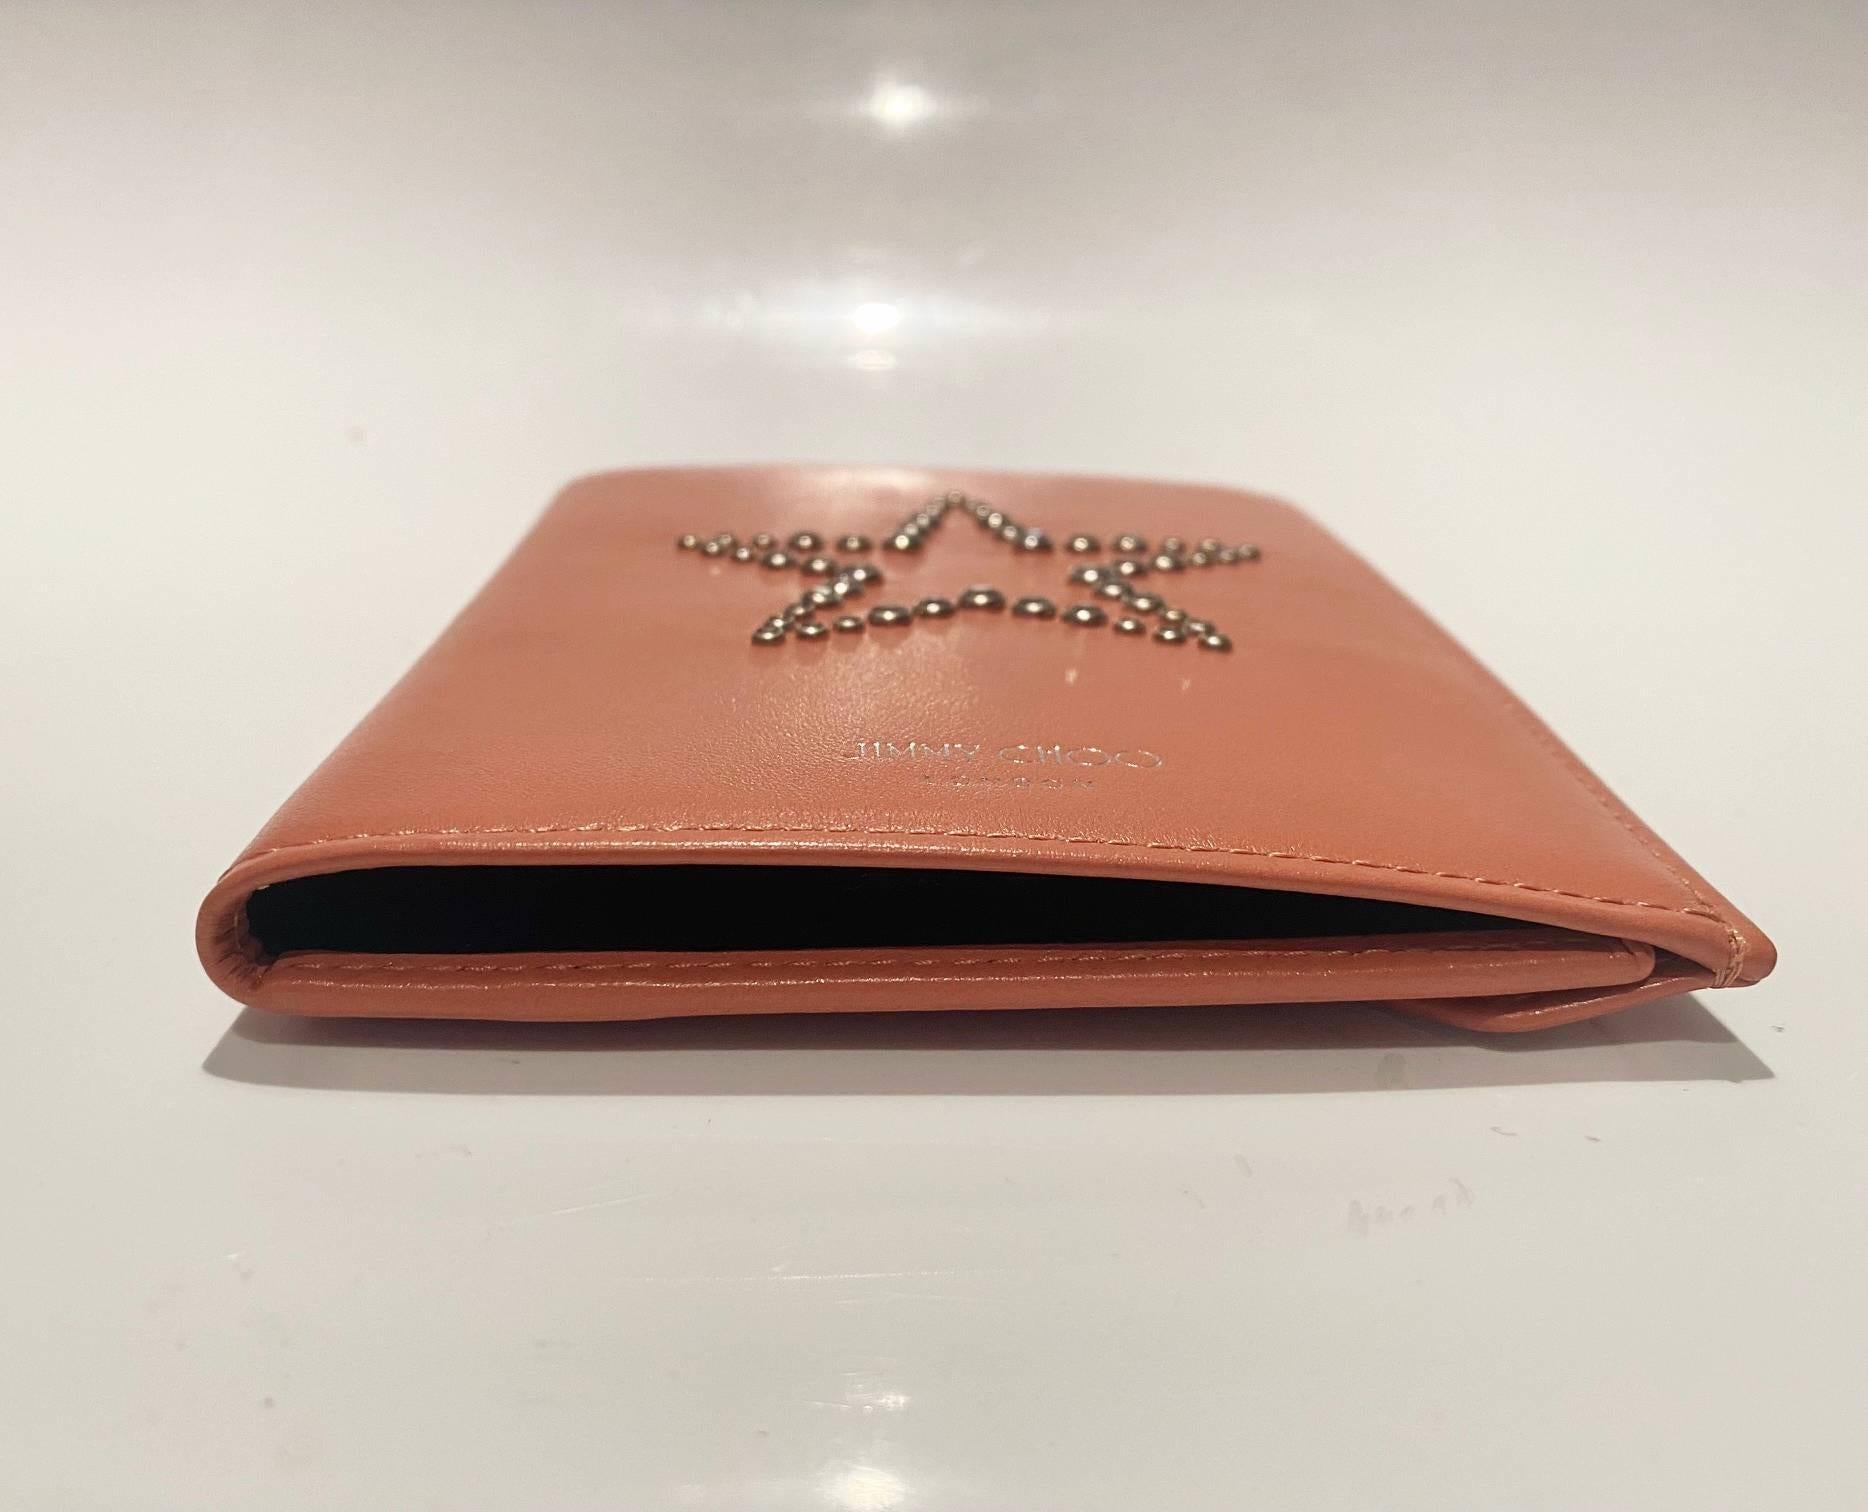 Jimmy Choo Pink Nappa leather 'Analya' star motif passport holder by Jimmy Choo. Interior pocket. Silver-tone stud star detailing at front.

Measurements: Snap closure at back. 5.5